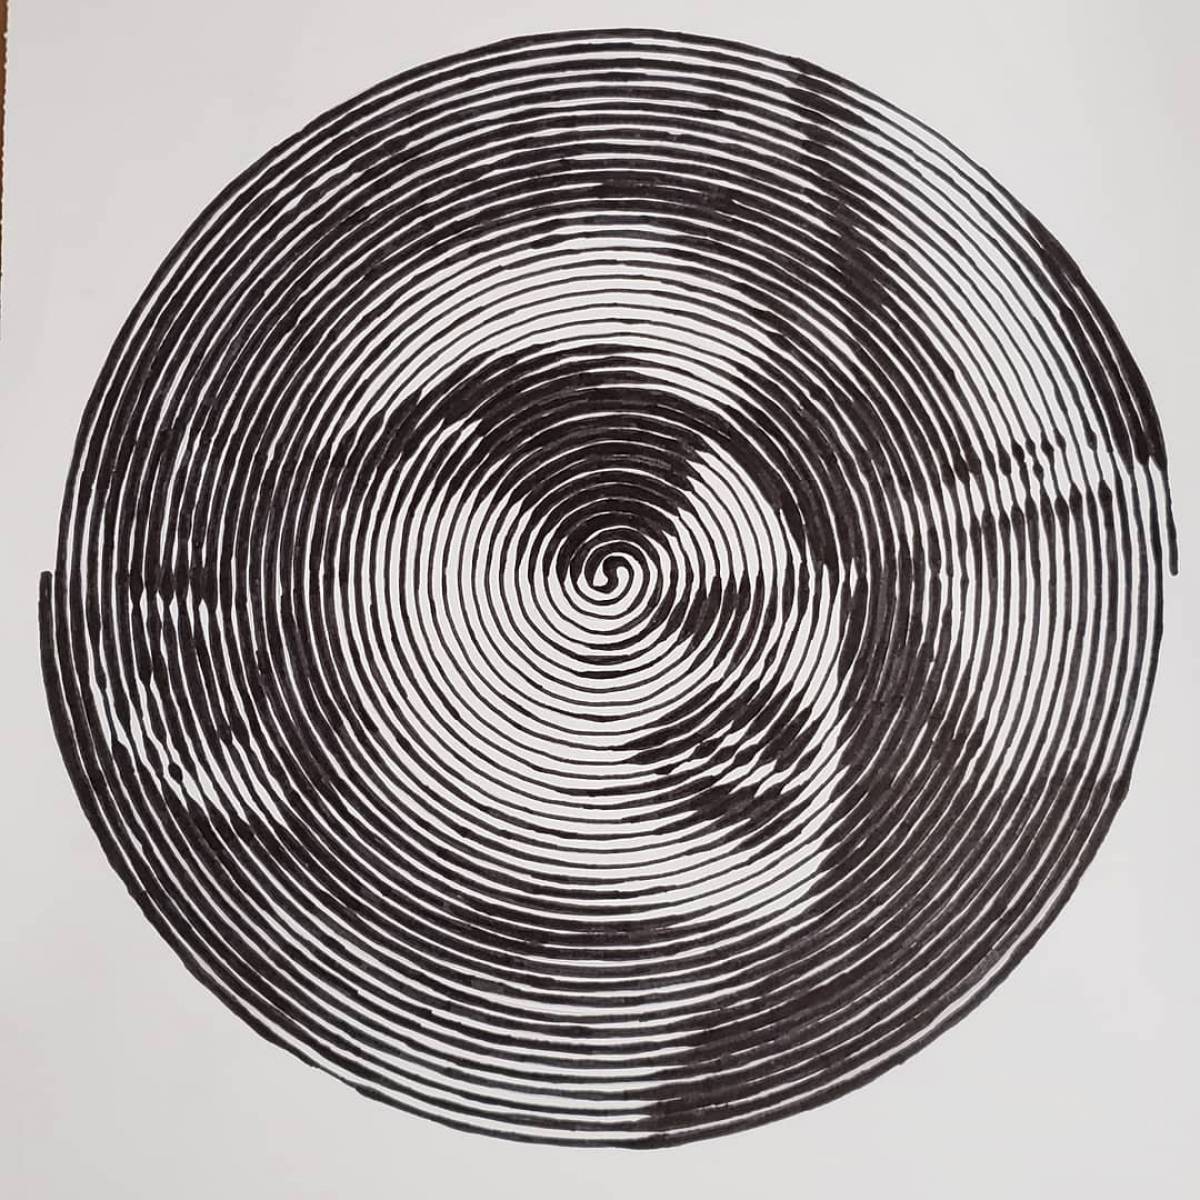 Shining spiral portrait sketch